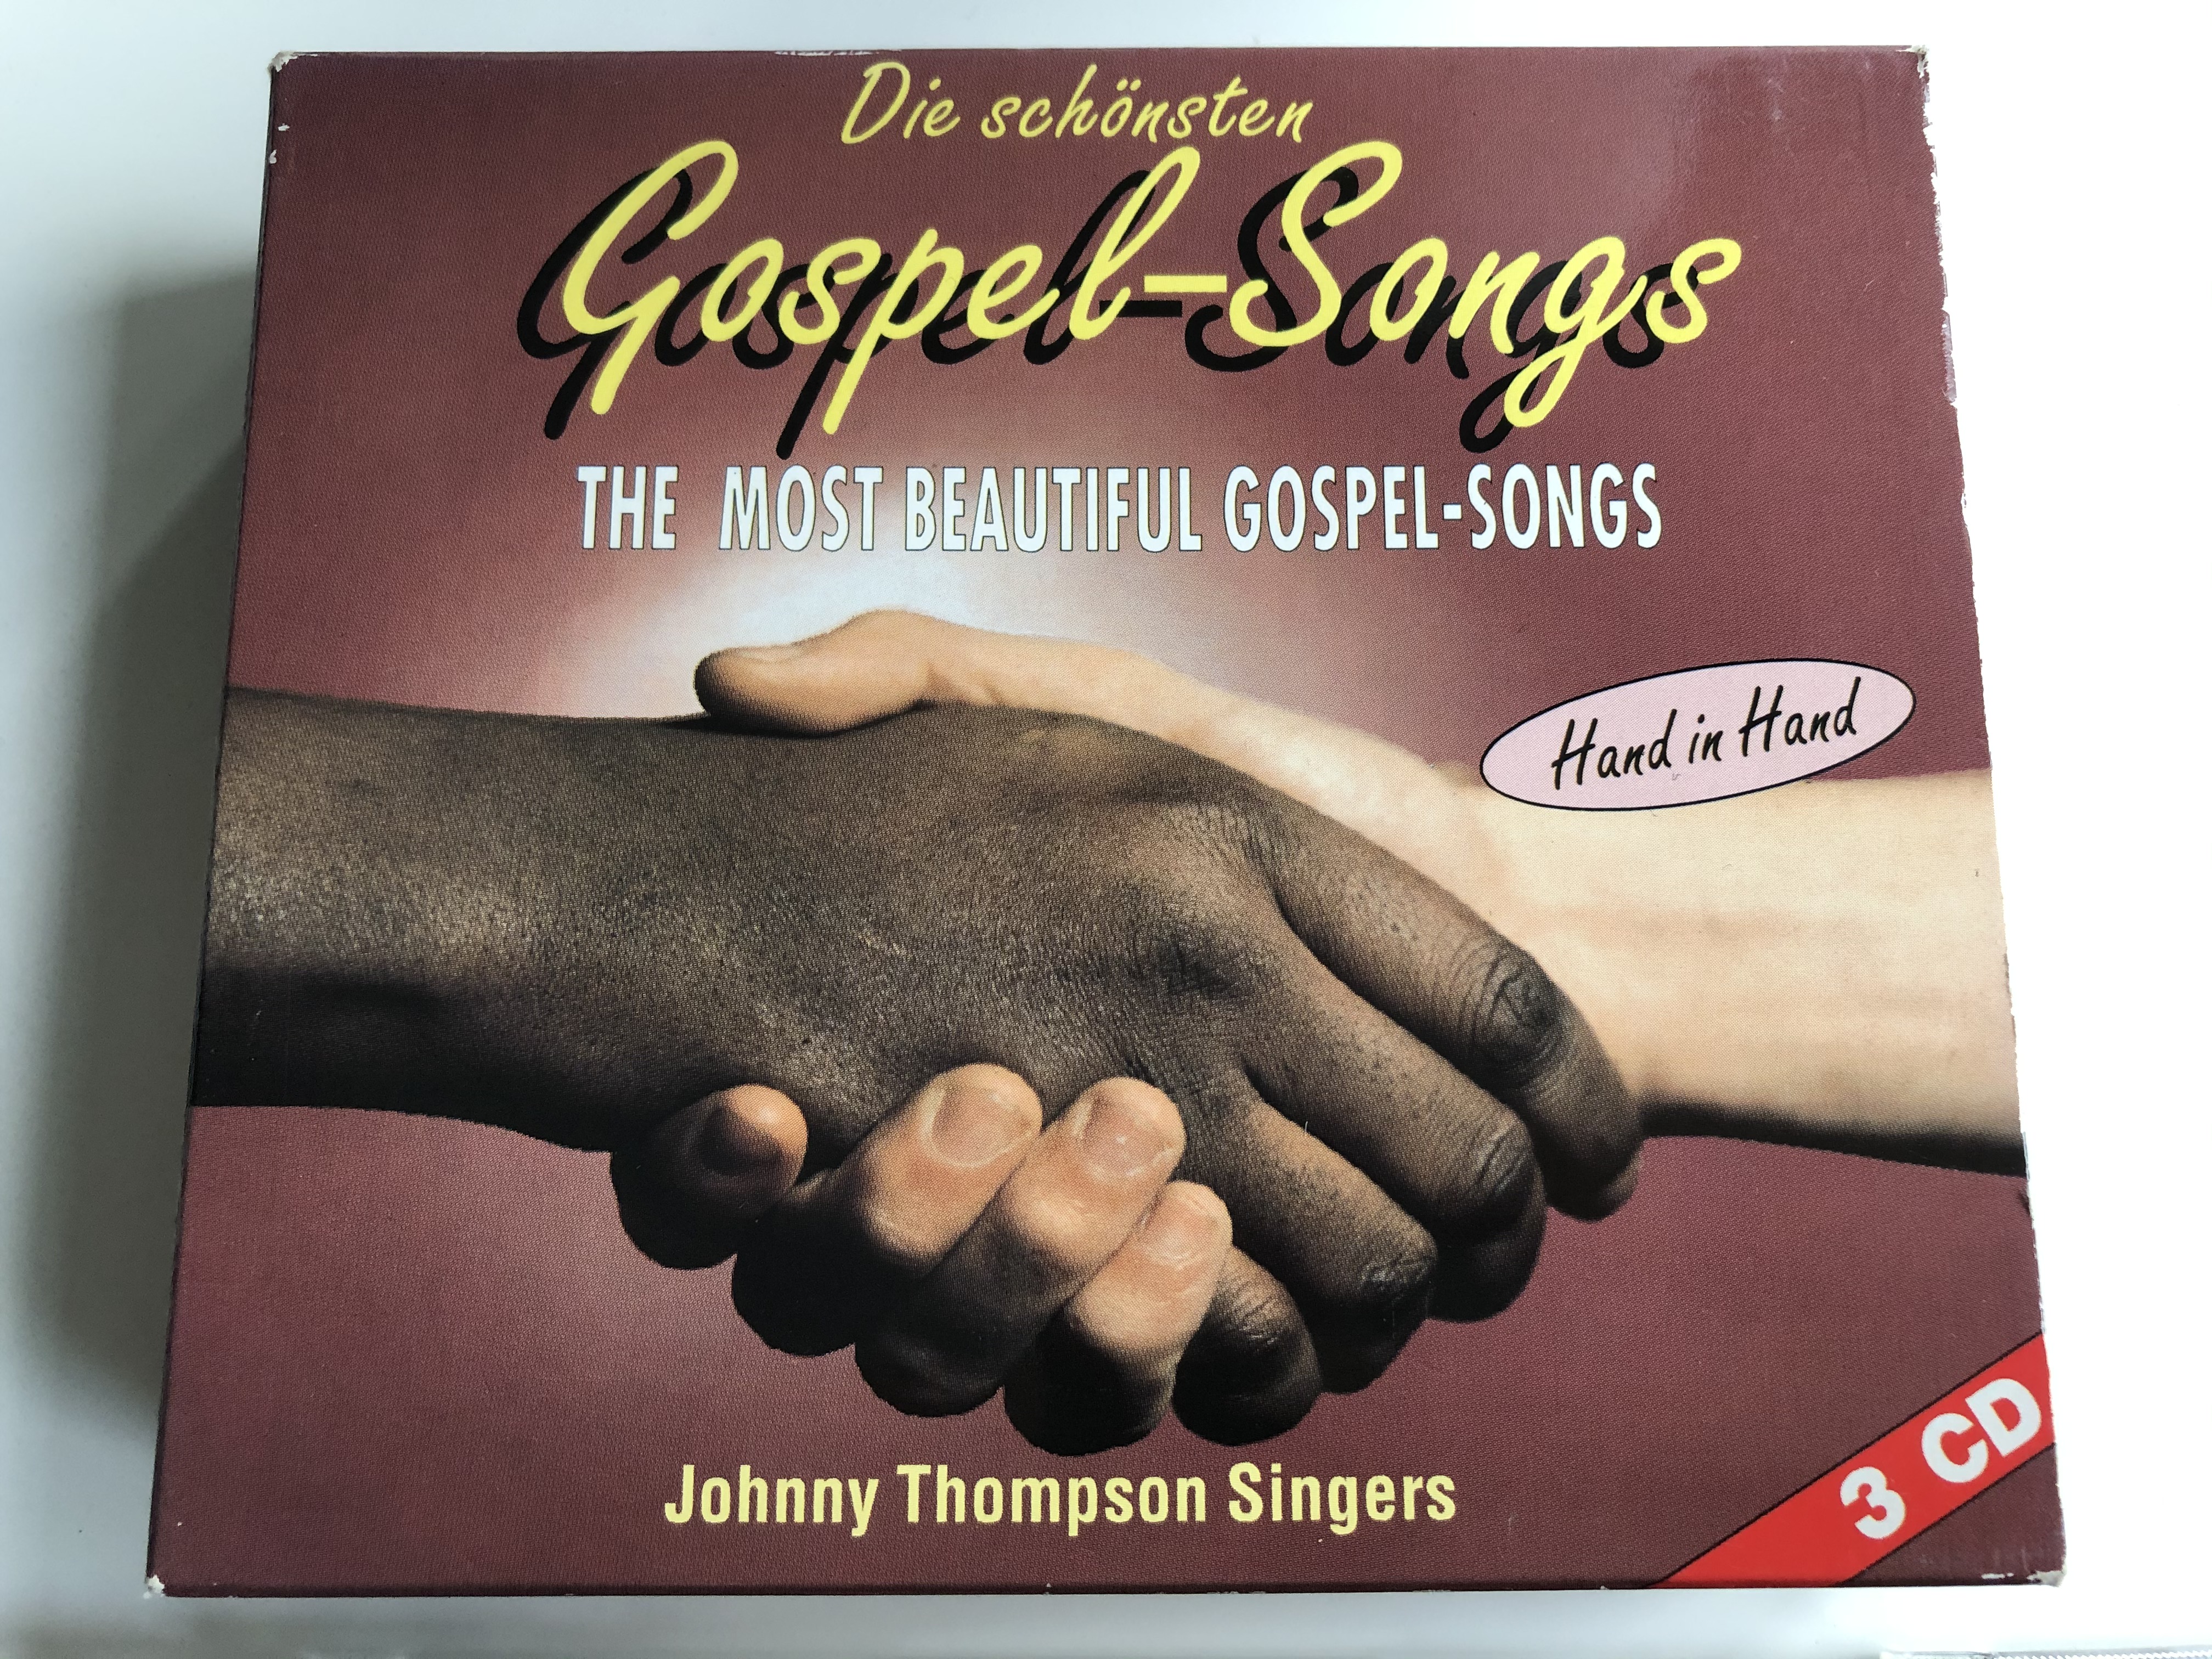 die-schonsten-gospel-songs-the-most-beautiful-gospel-songs-hand-in-hand-johnny-thompson-singers-high-grade-3x-audio-cd-105-1-.jpg